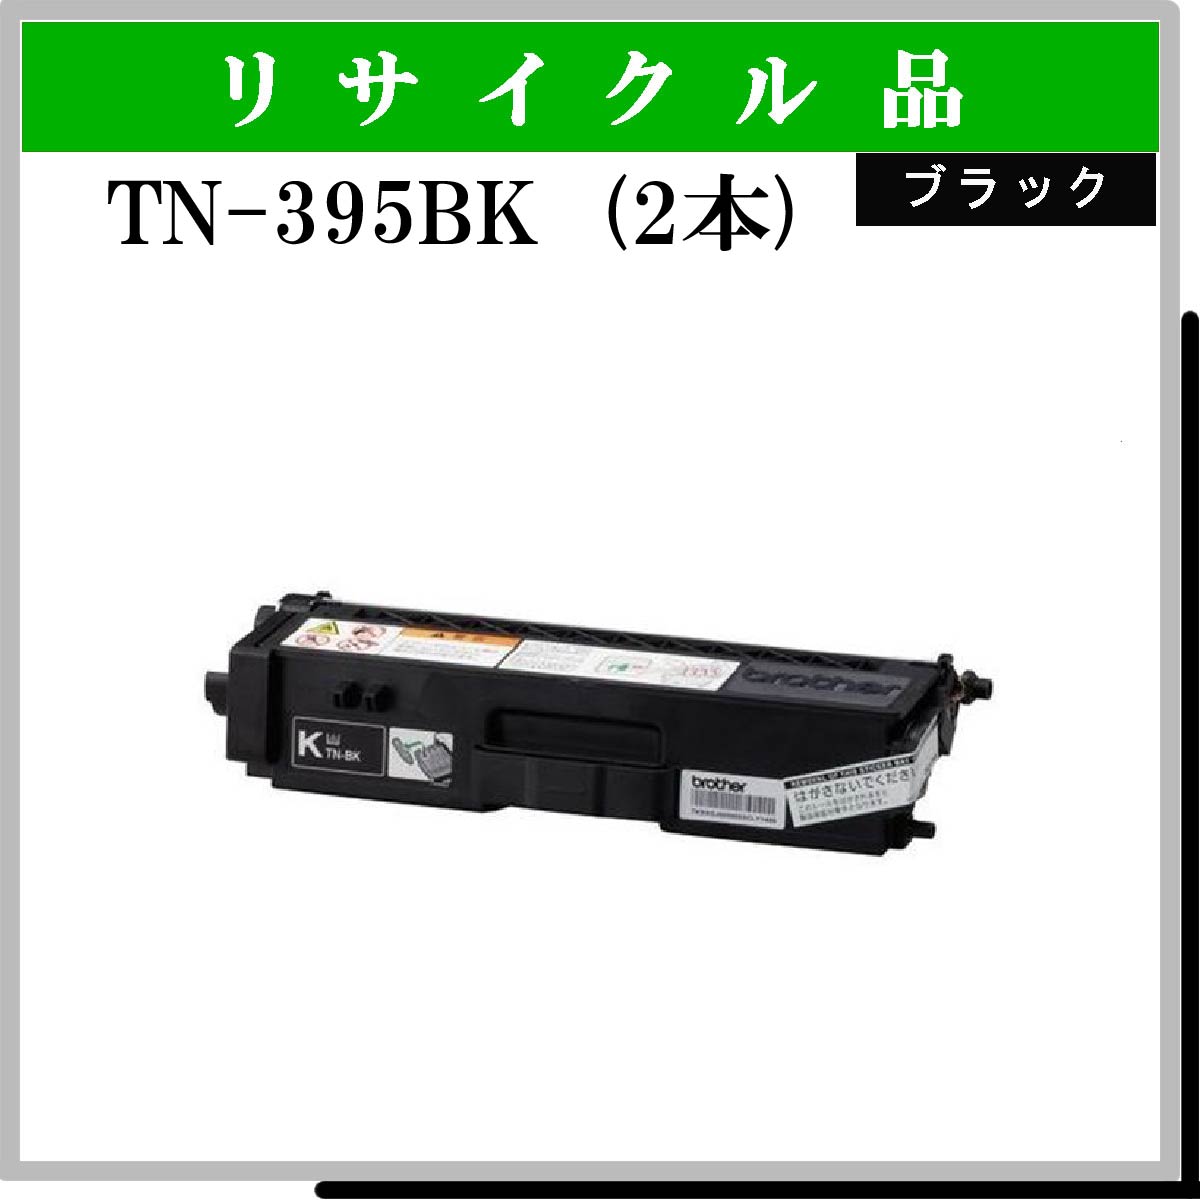 TN-395BK (2本ｾｯﾄ) [TN-395BK ﾌﾞﾗｯｸ (2本ｾｯﾄ)] - 6,930円 : トナー・リサイクルトナー通販はブルー